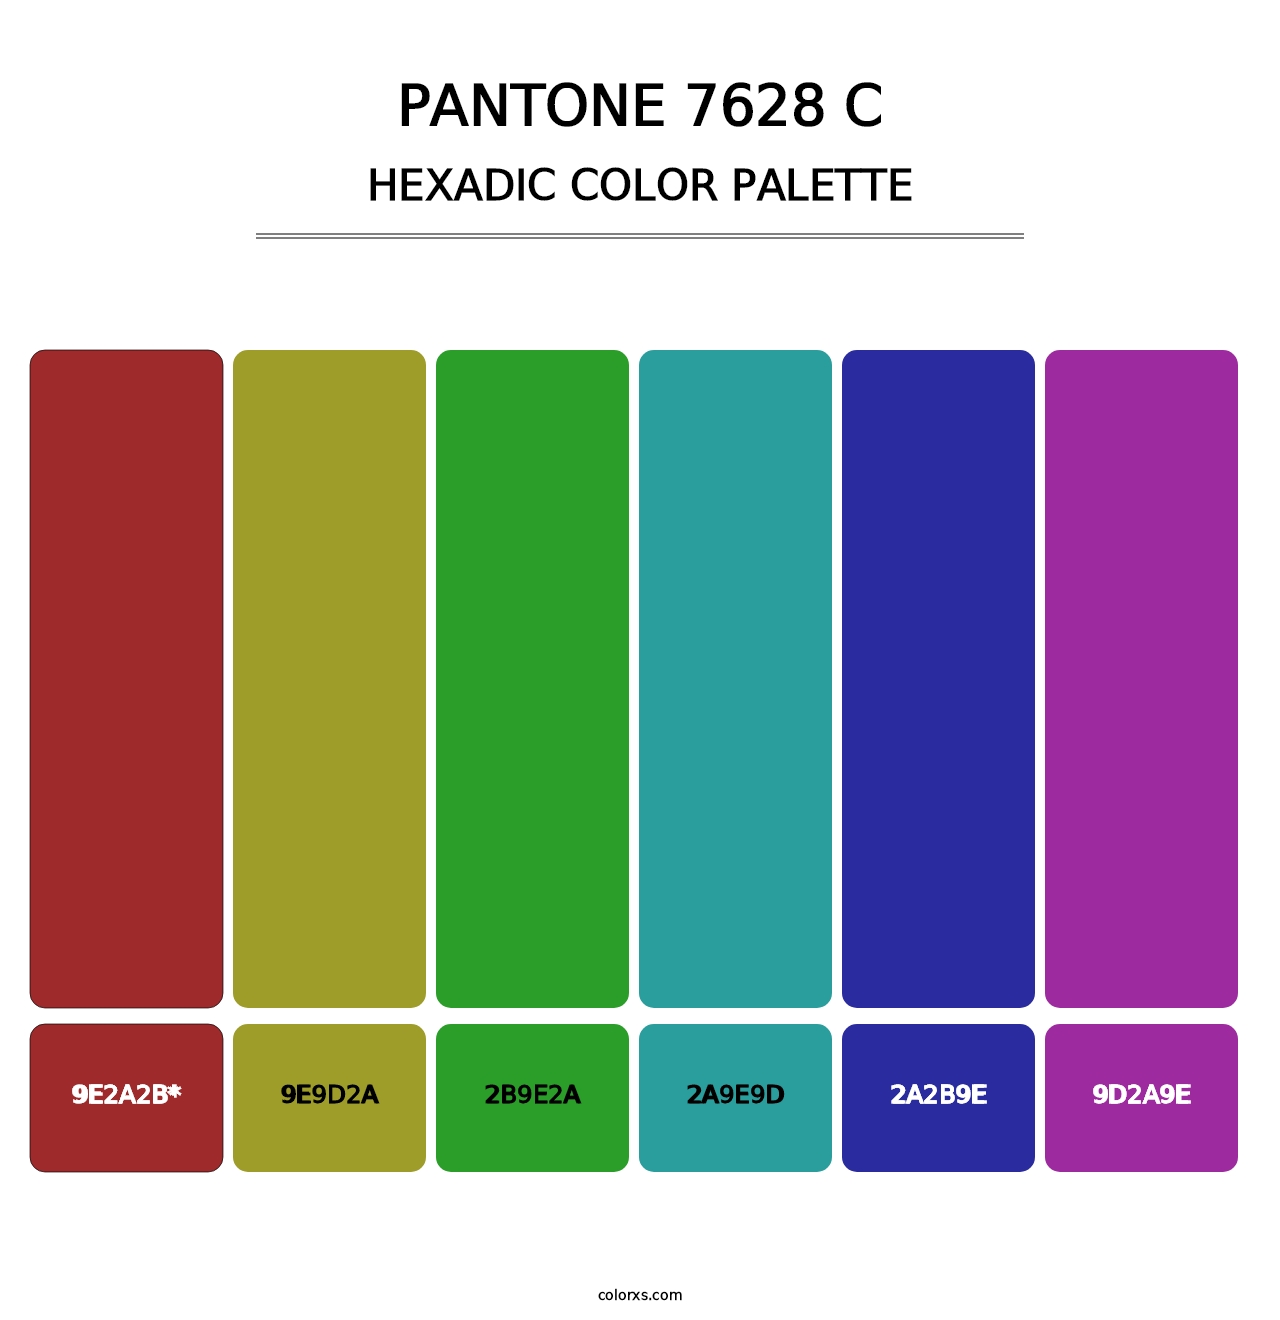 PANTONE 7628 C - Hexadic Color Palette